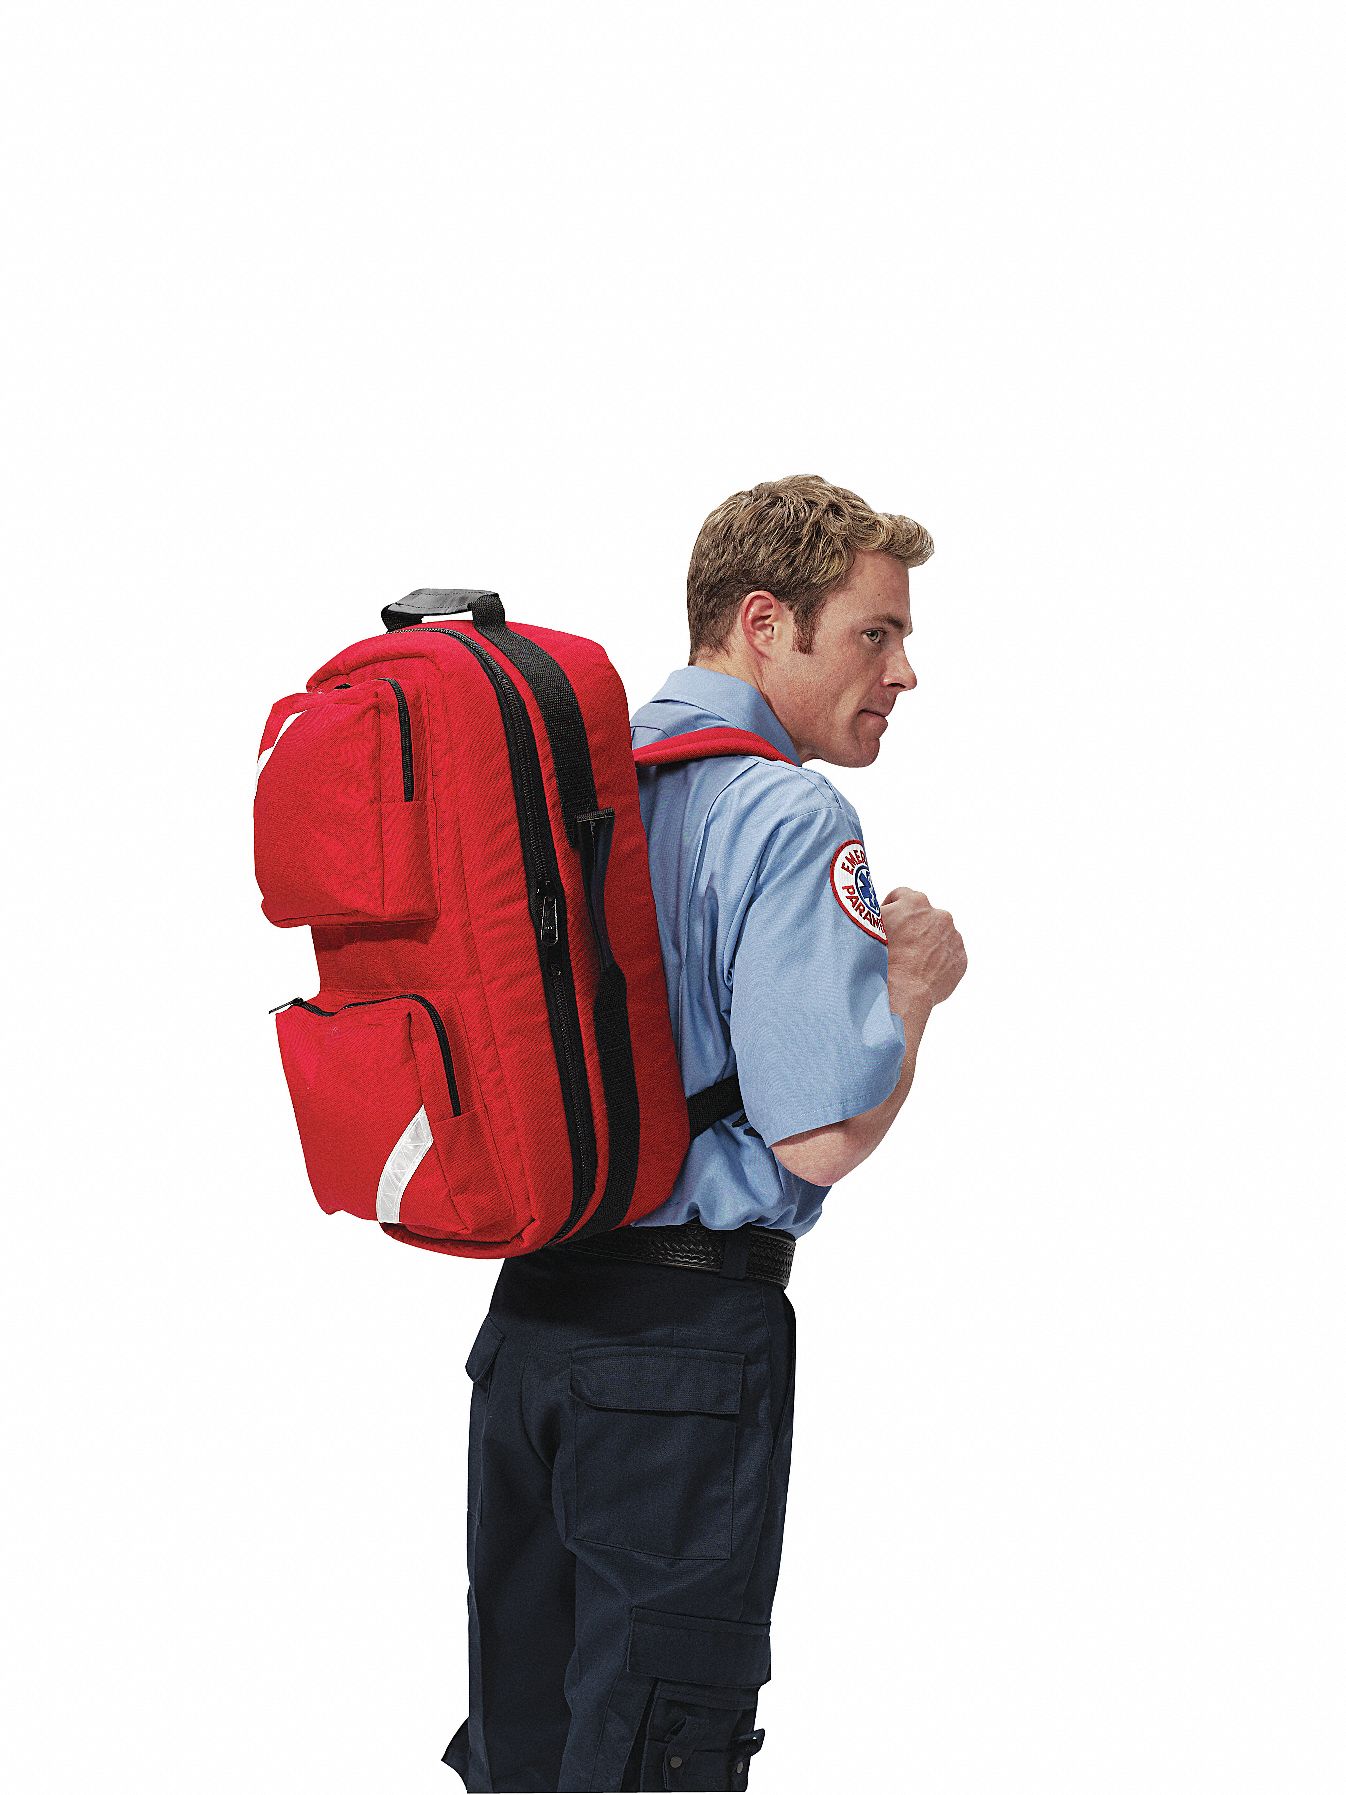 Backpack: Red, 1000D Cordura, Zipper, 20 in Ht, 11 in Wd